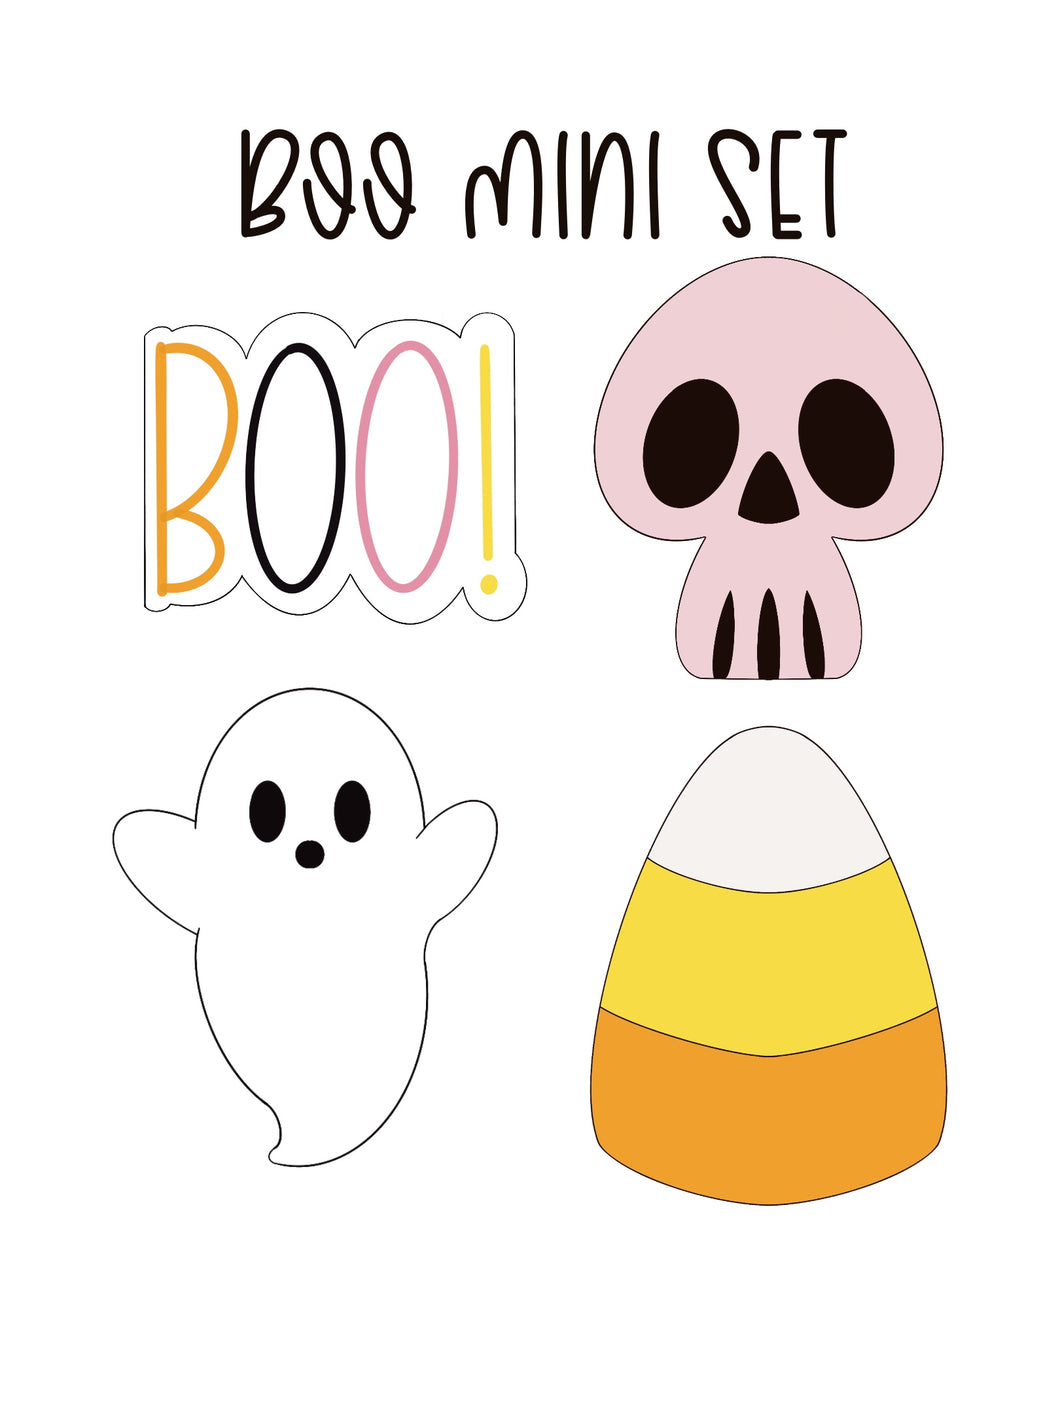 Boo Mini Set